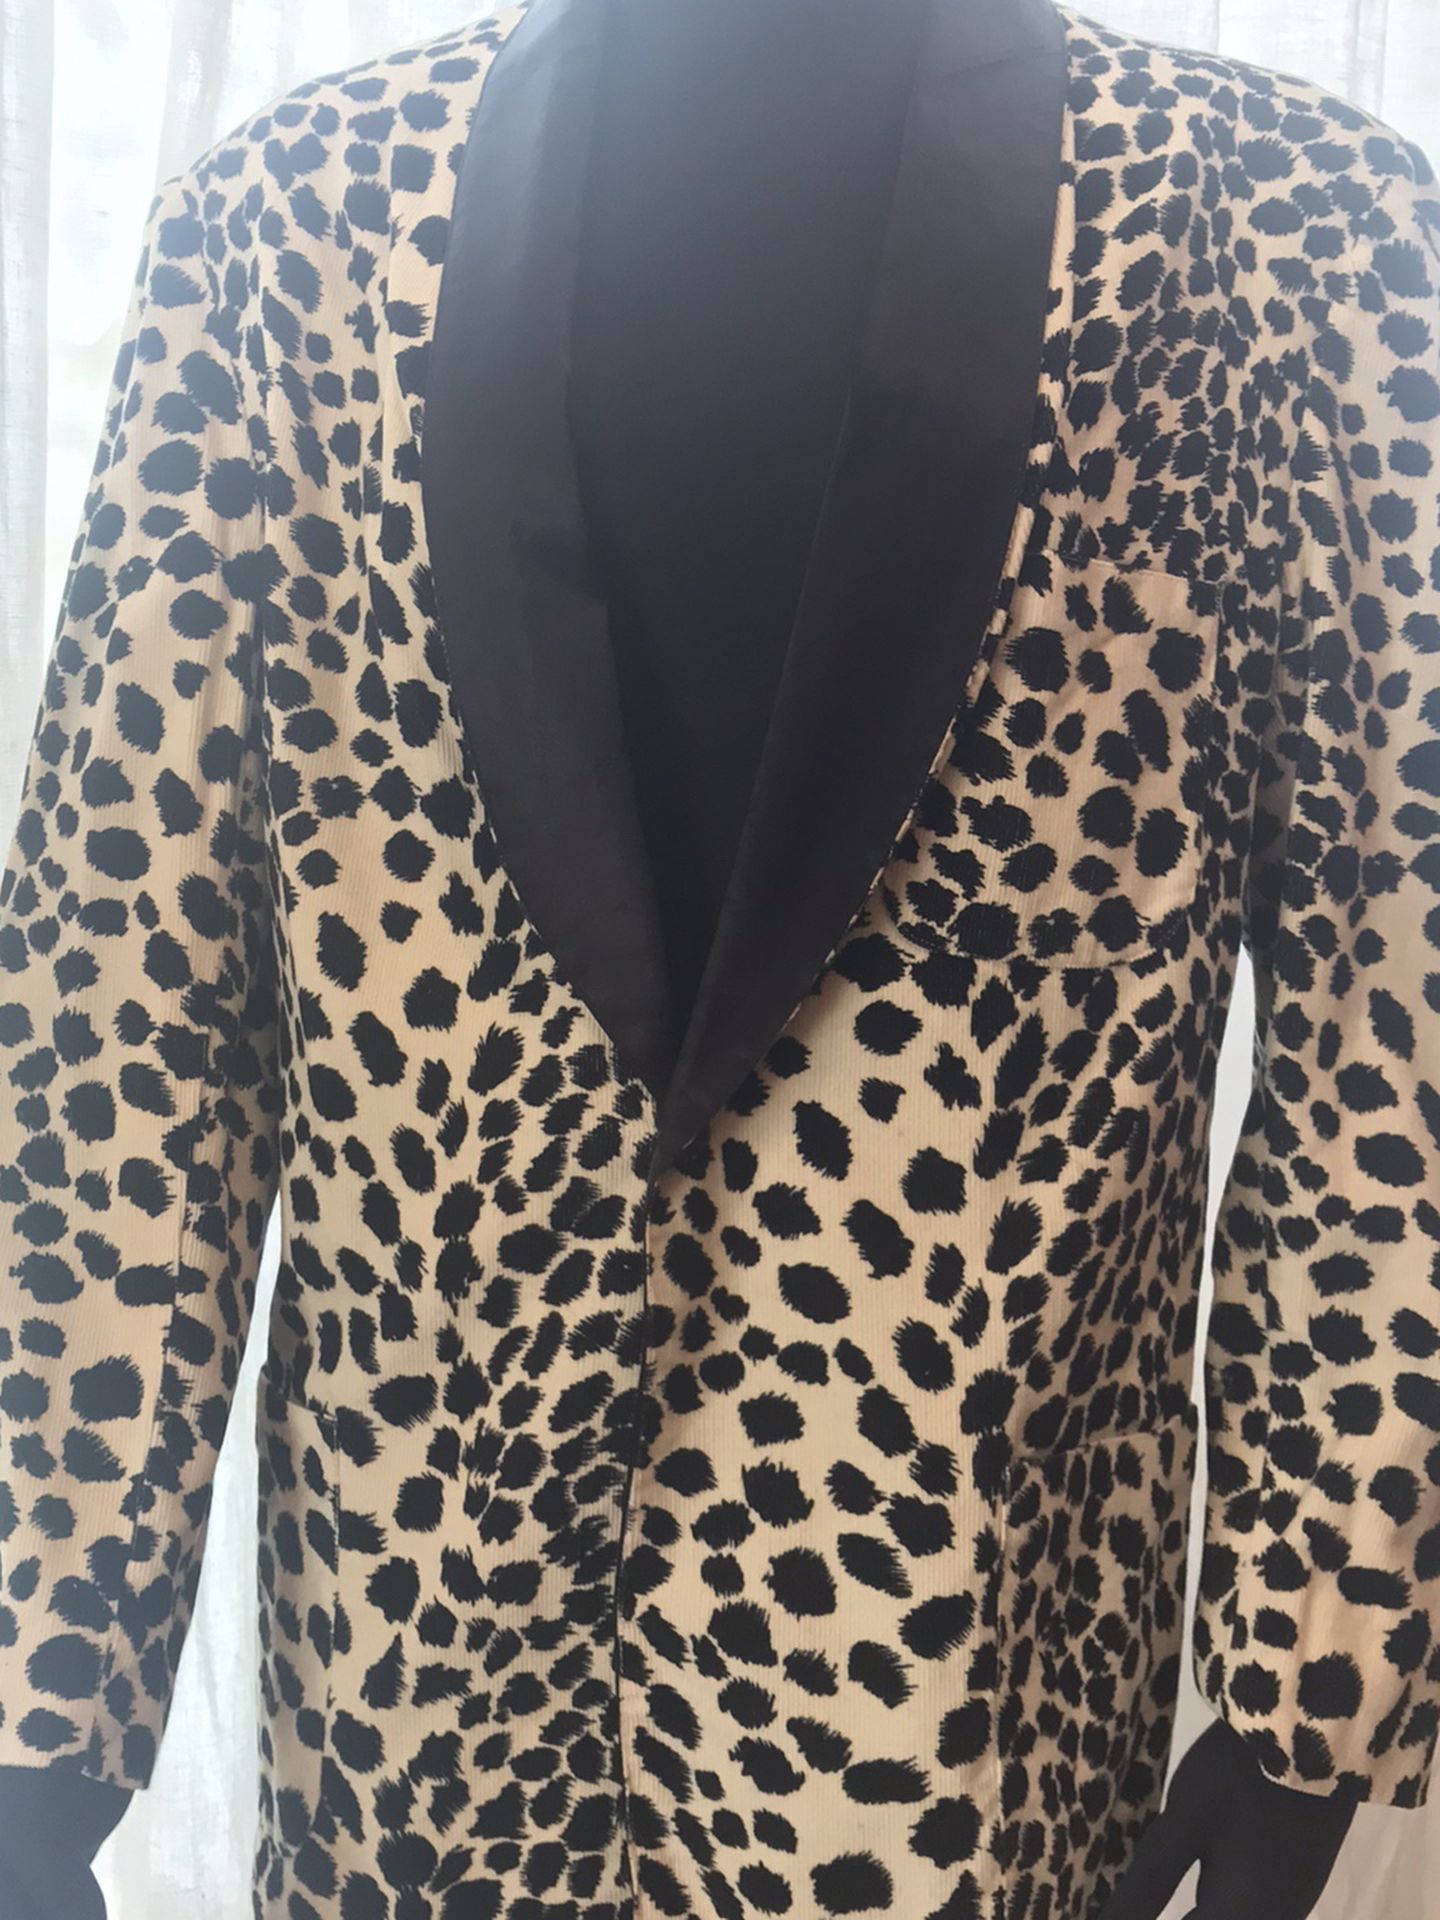 Vint 80s corduroy tux Leopard print jacket blazer! Animal! 🐆